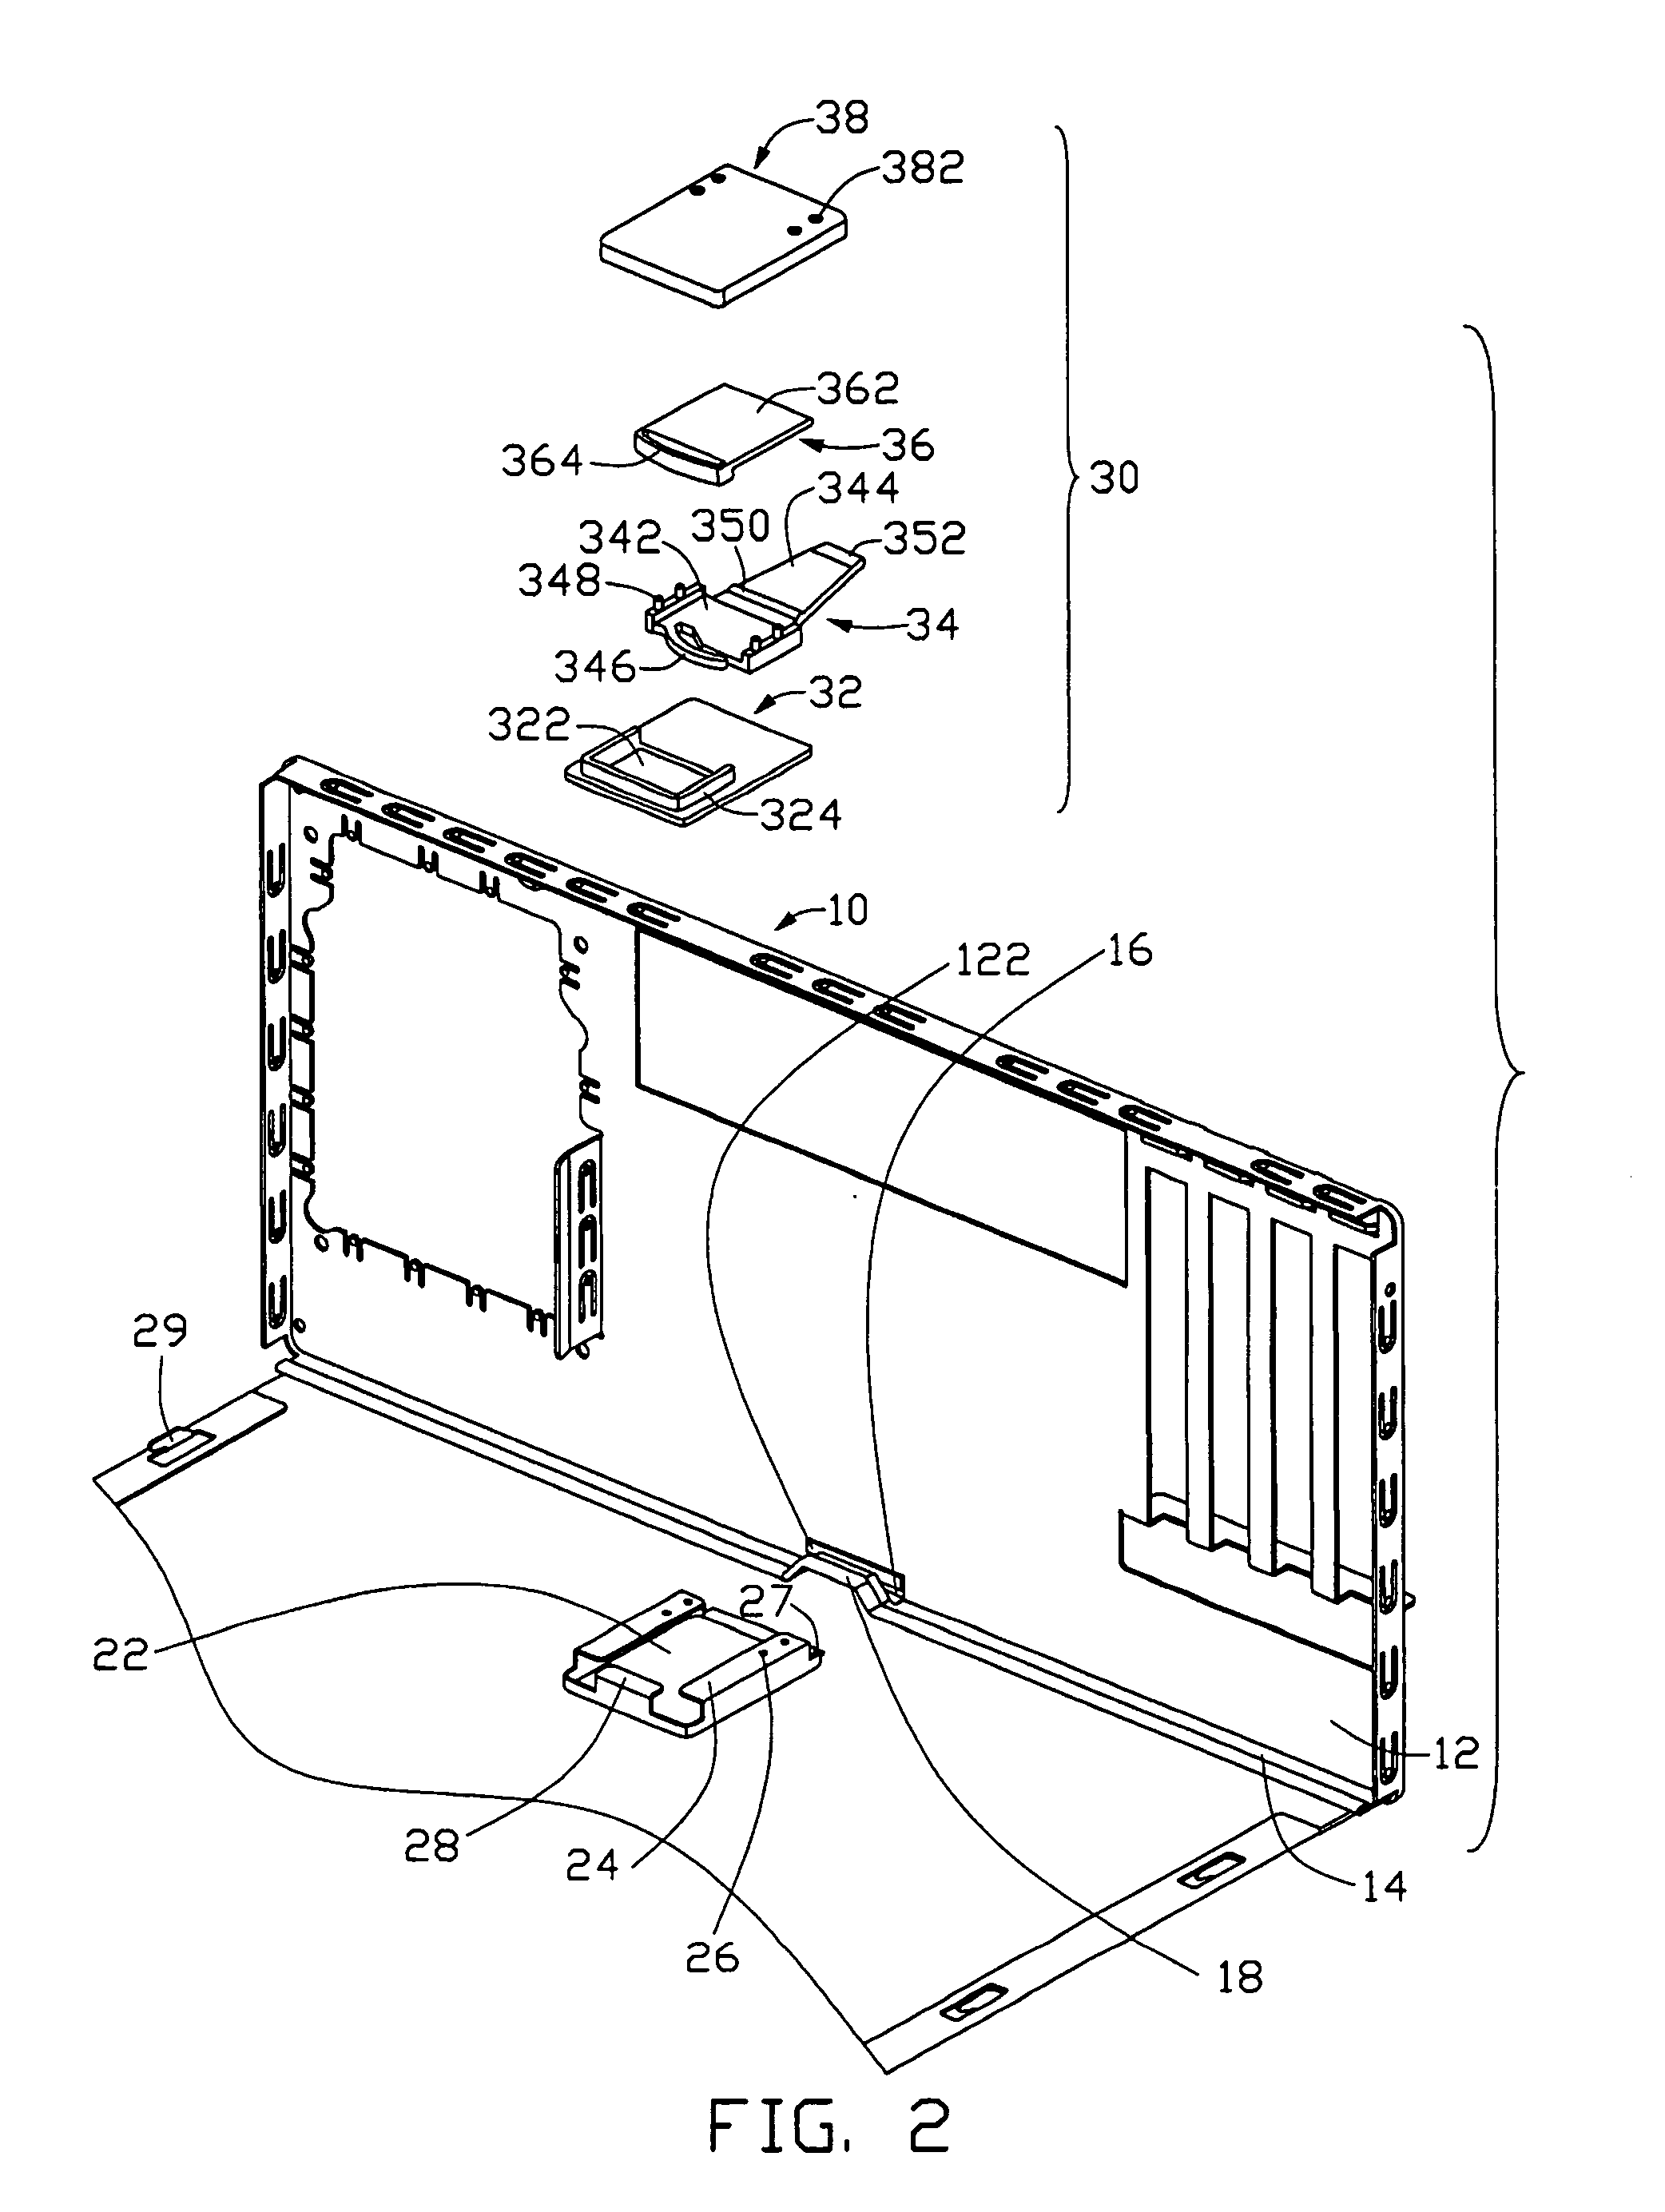 Computer enclosure incorporating hood fastener